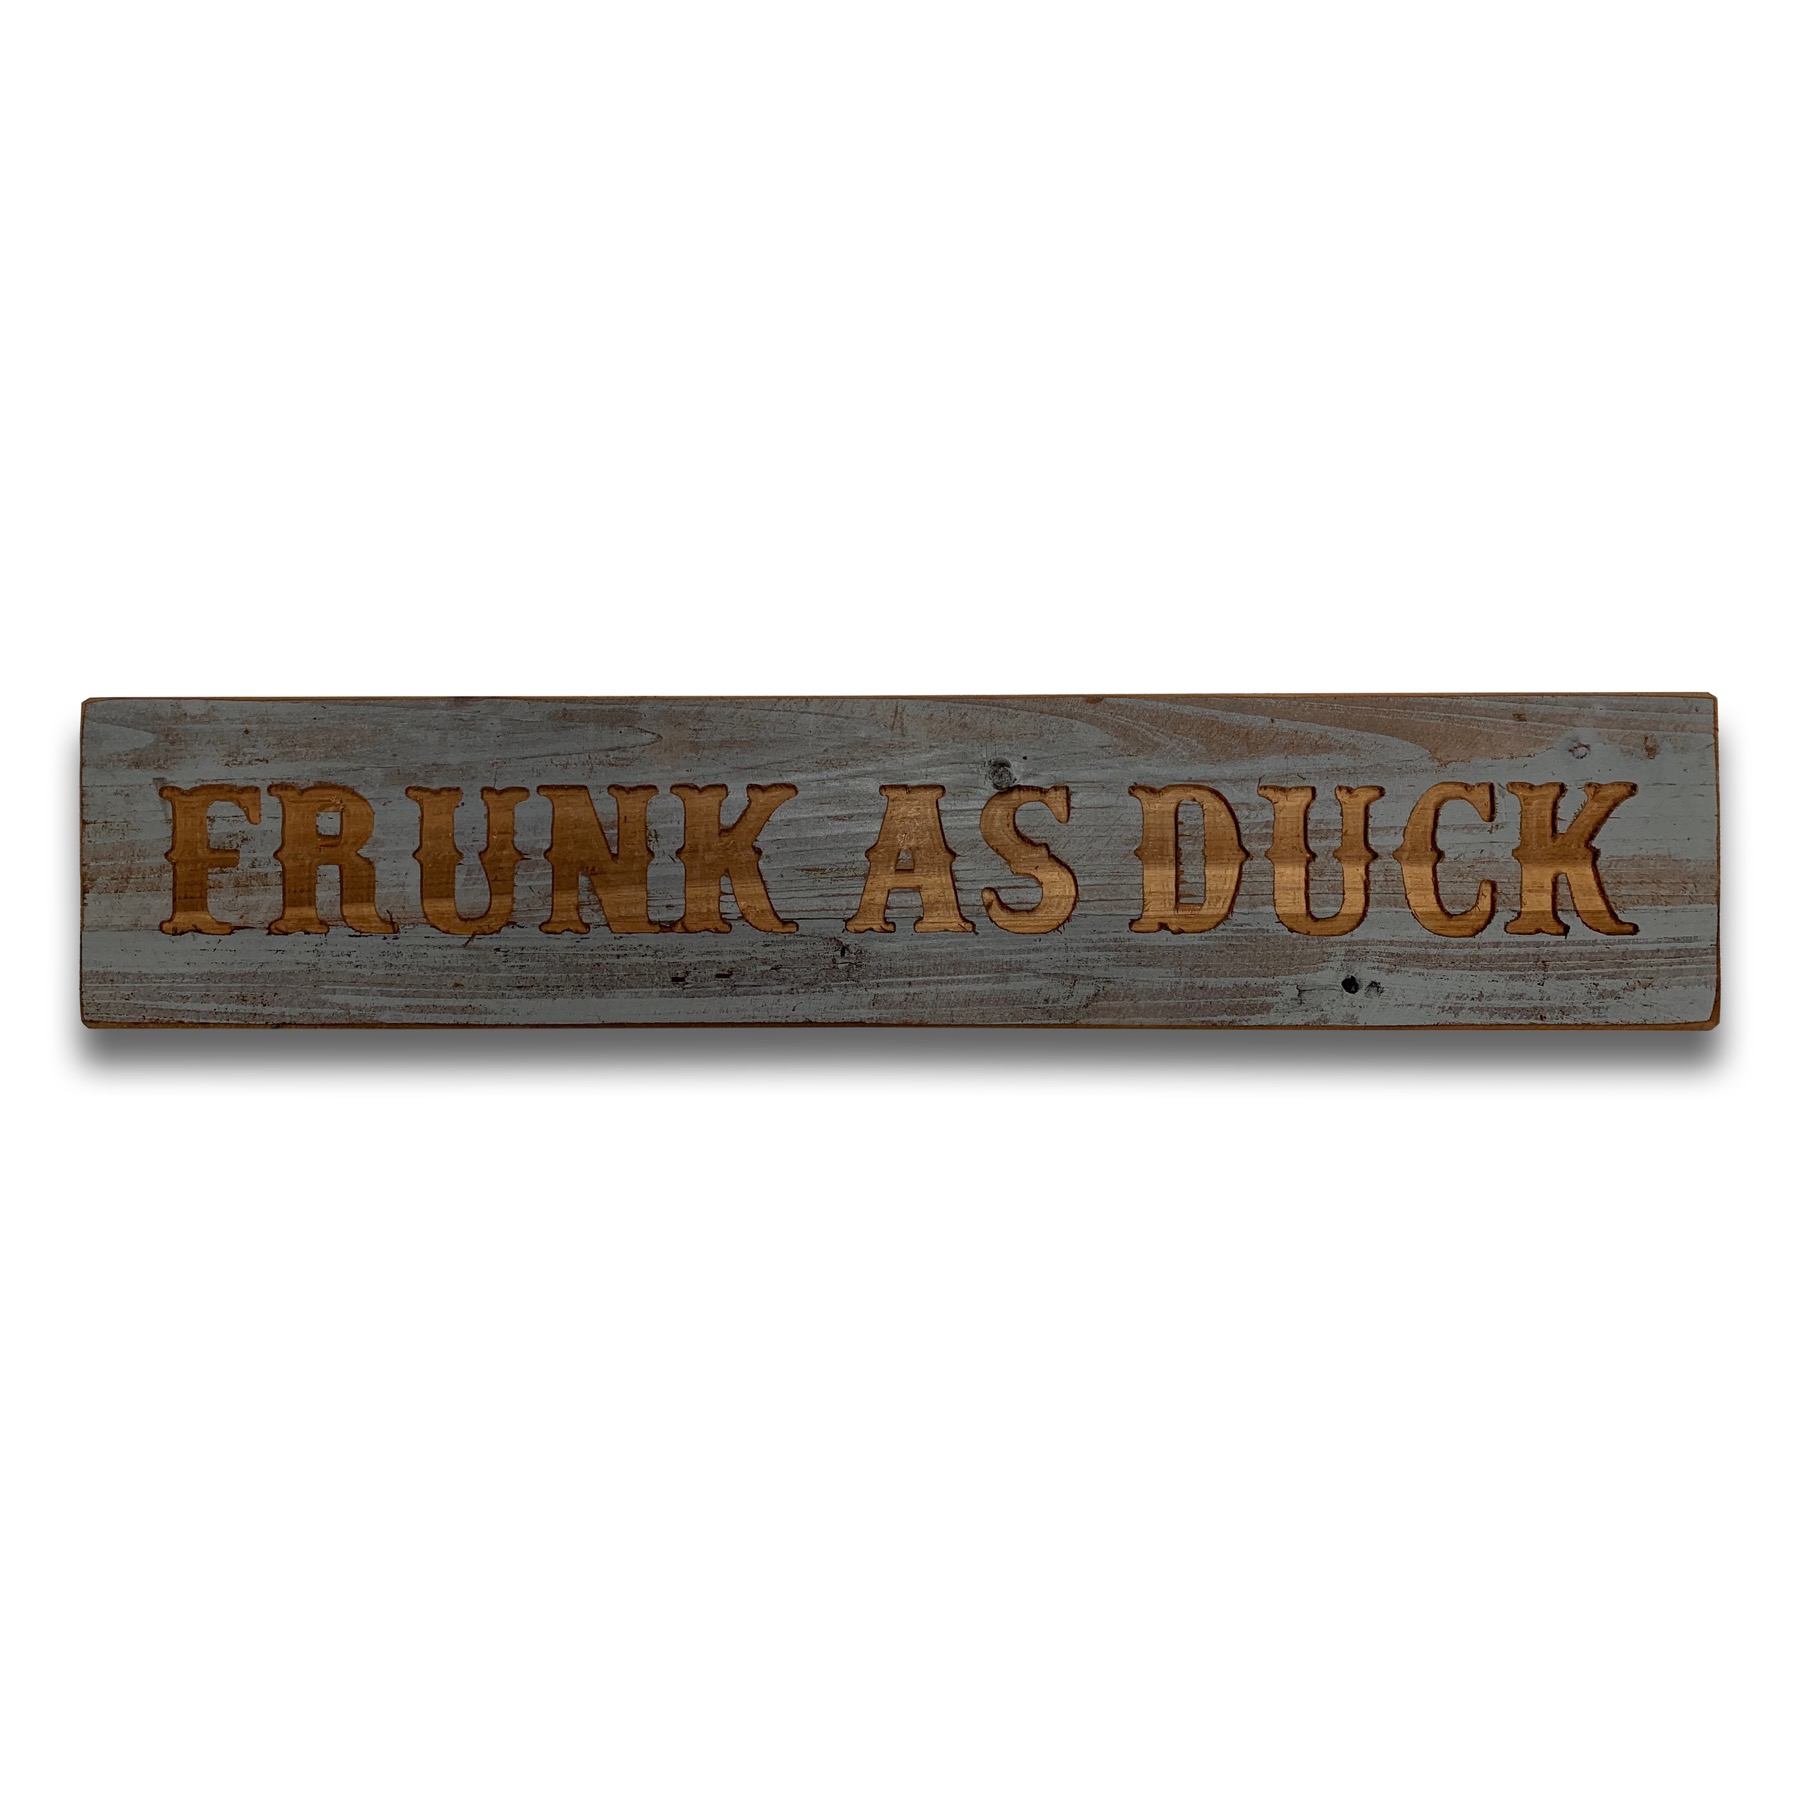 Frunk Grey Wash Wooden Message Plaque - Image 1